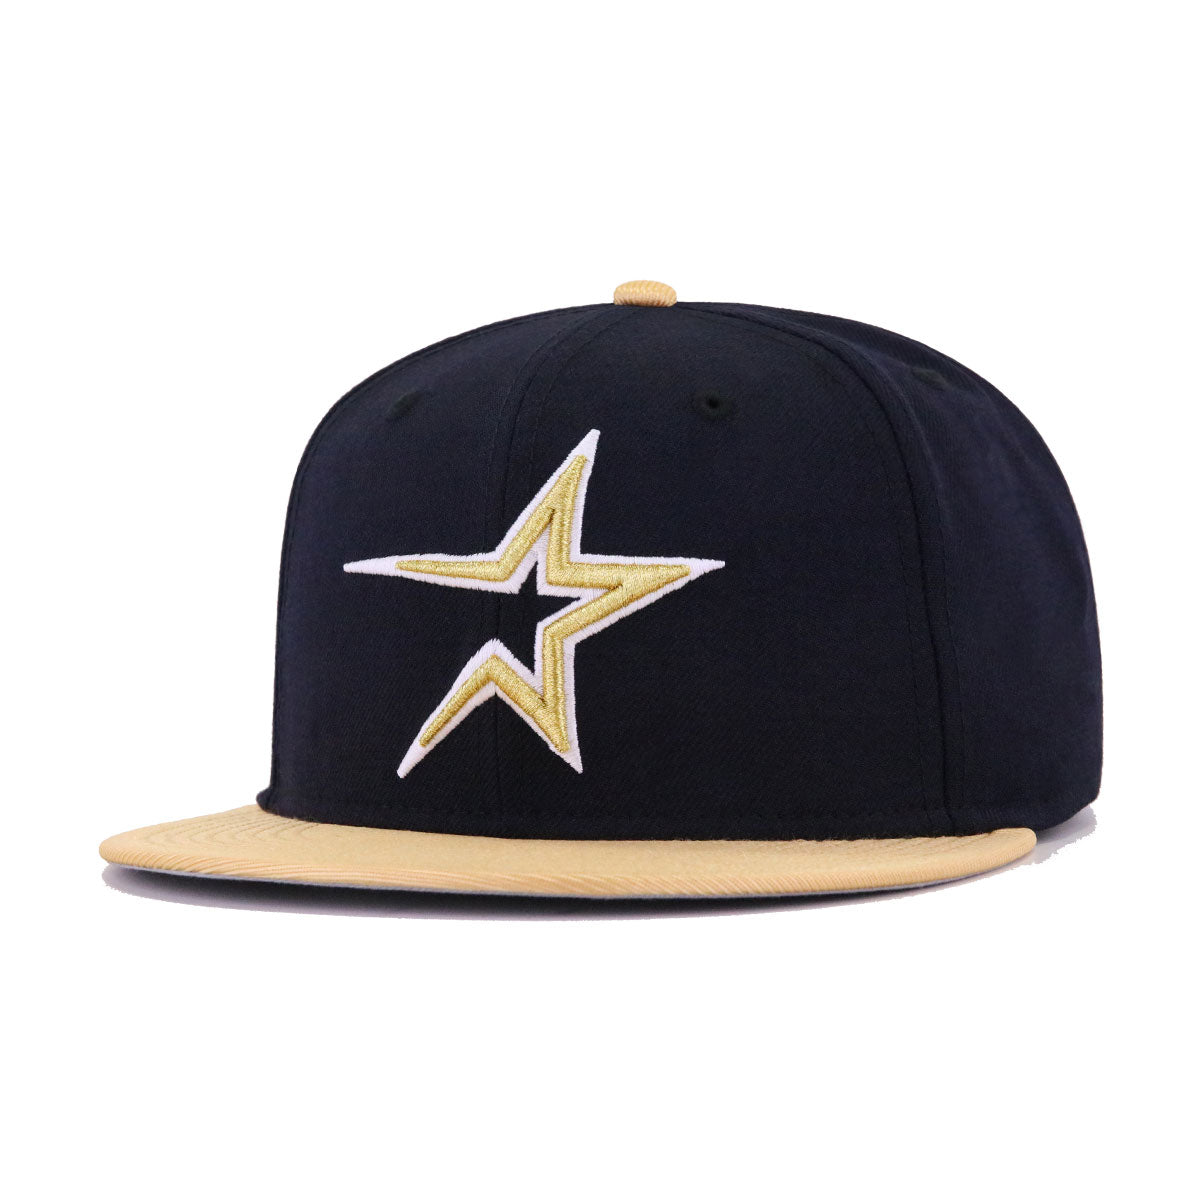 Official MLB Throwback Cap- Houston Astros